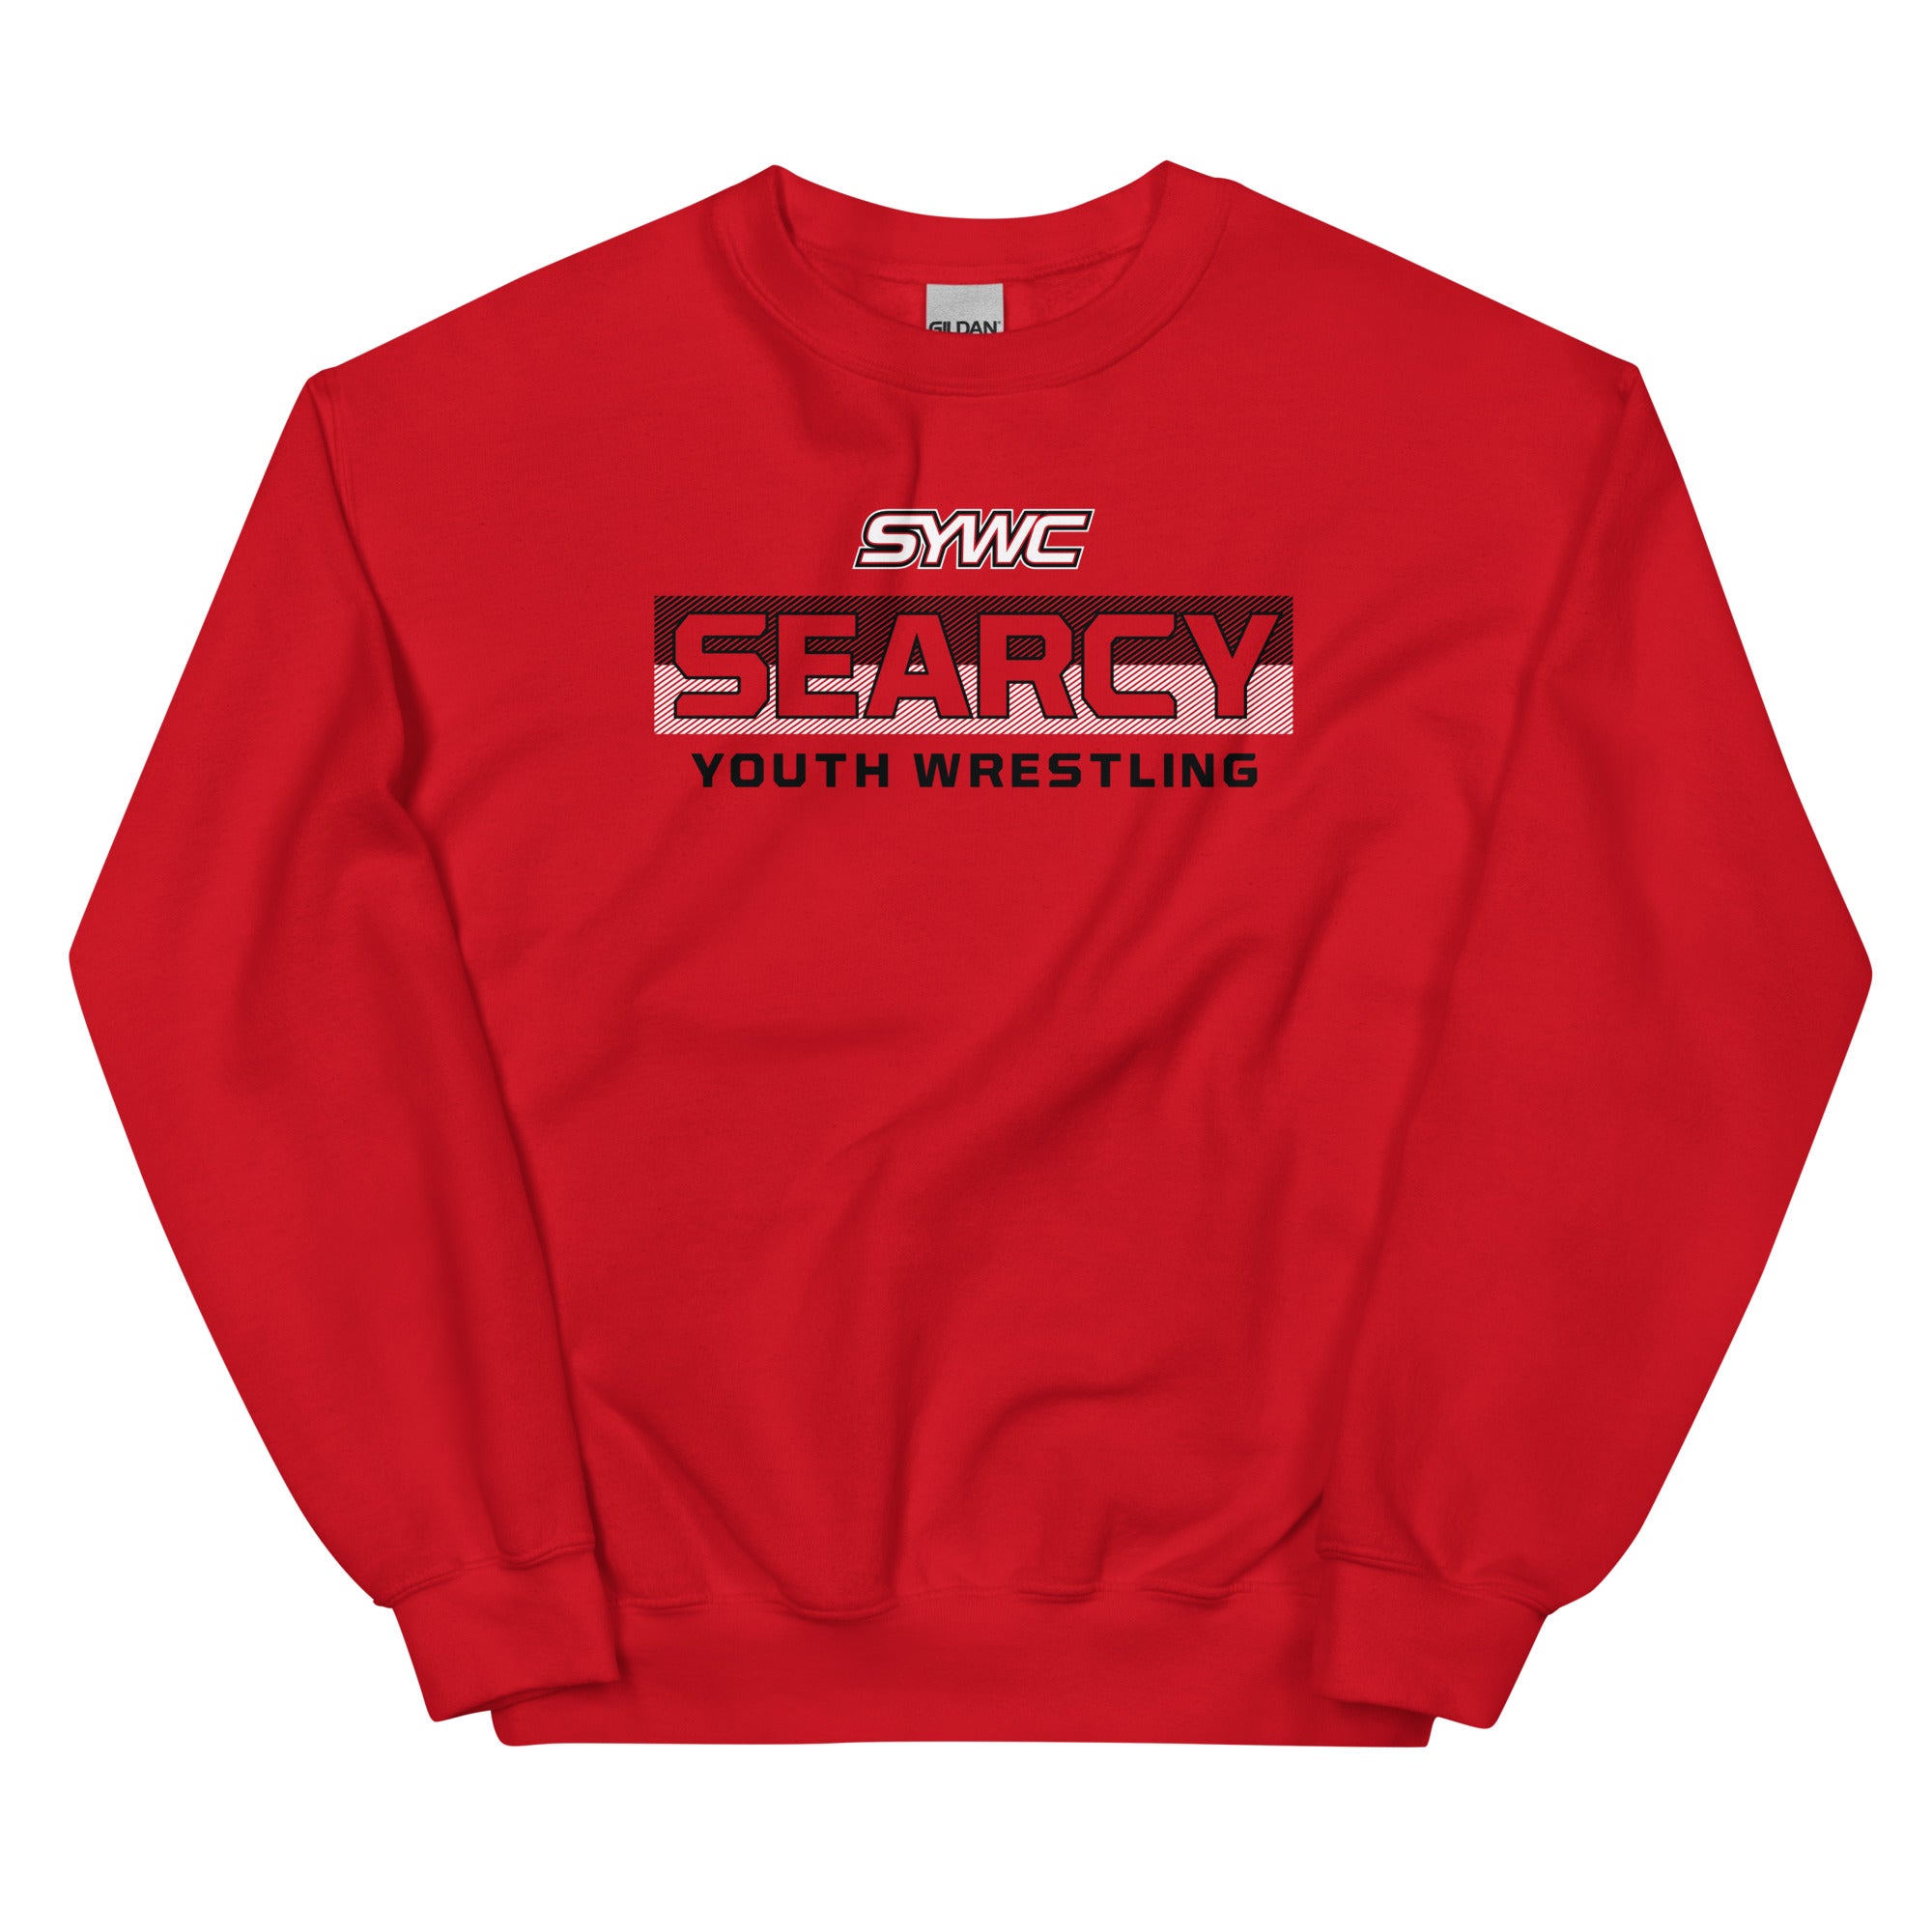 Searcy Youth Wrestling Unisex Crew Neck Sweatshirt